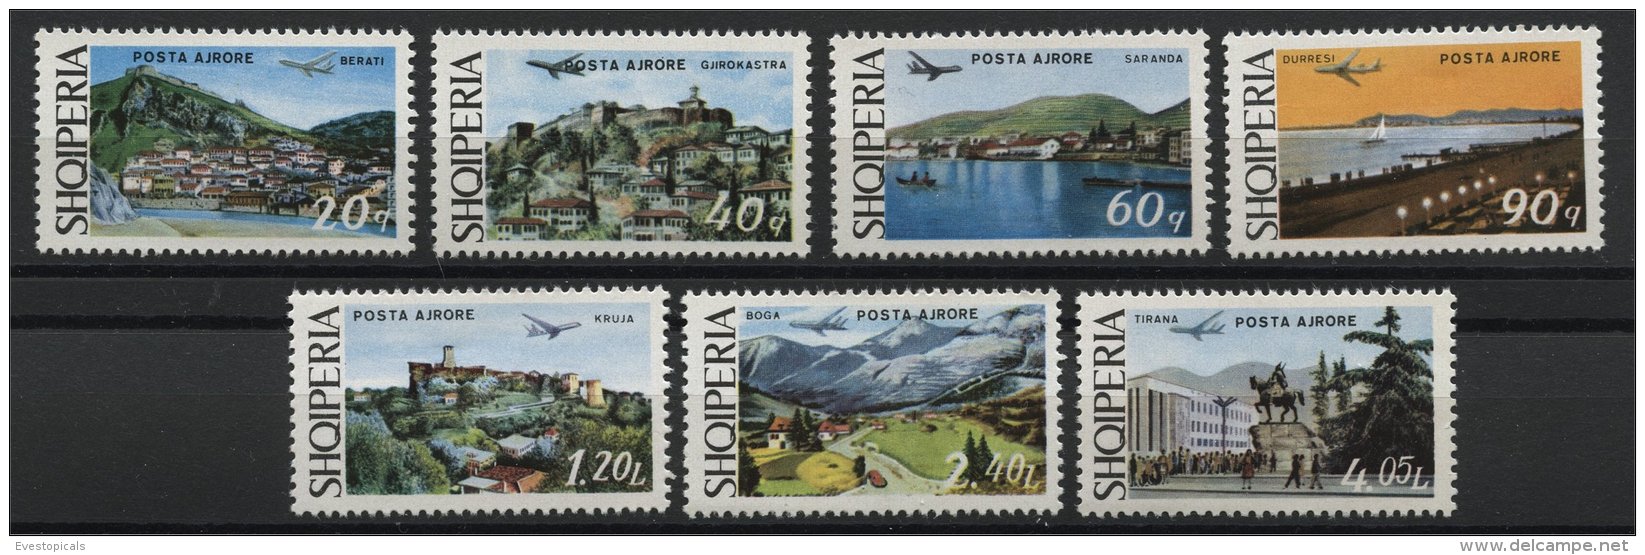 ALBANIA, PICTURE OF ALBANIA 1975, AIRMAIL, NH SET - Albanie